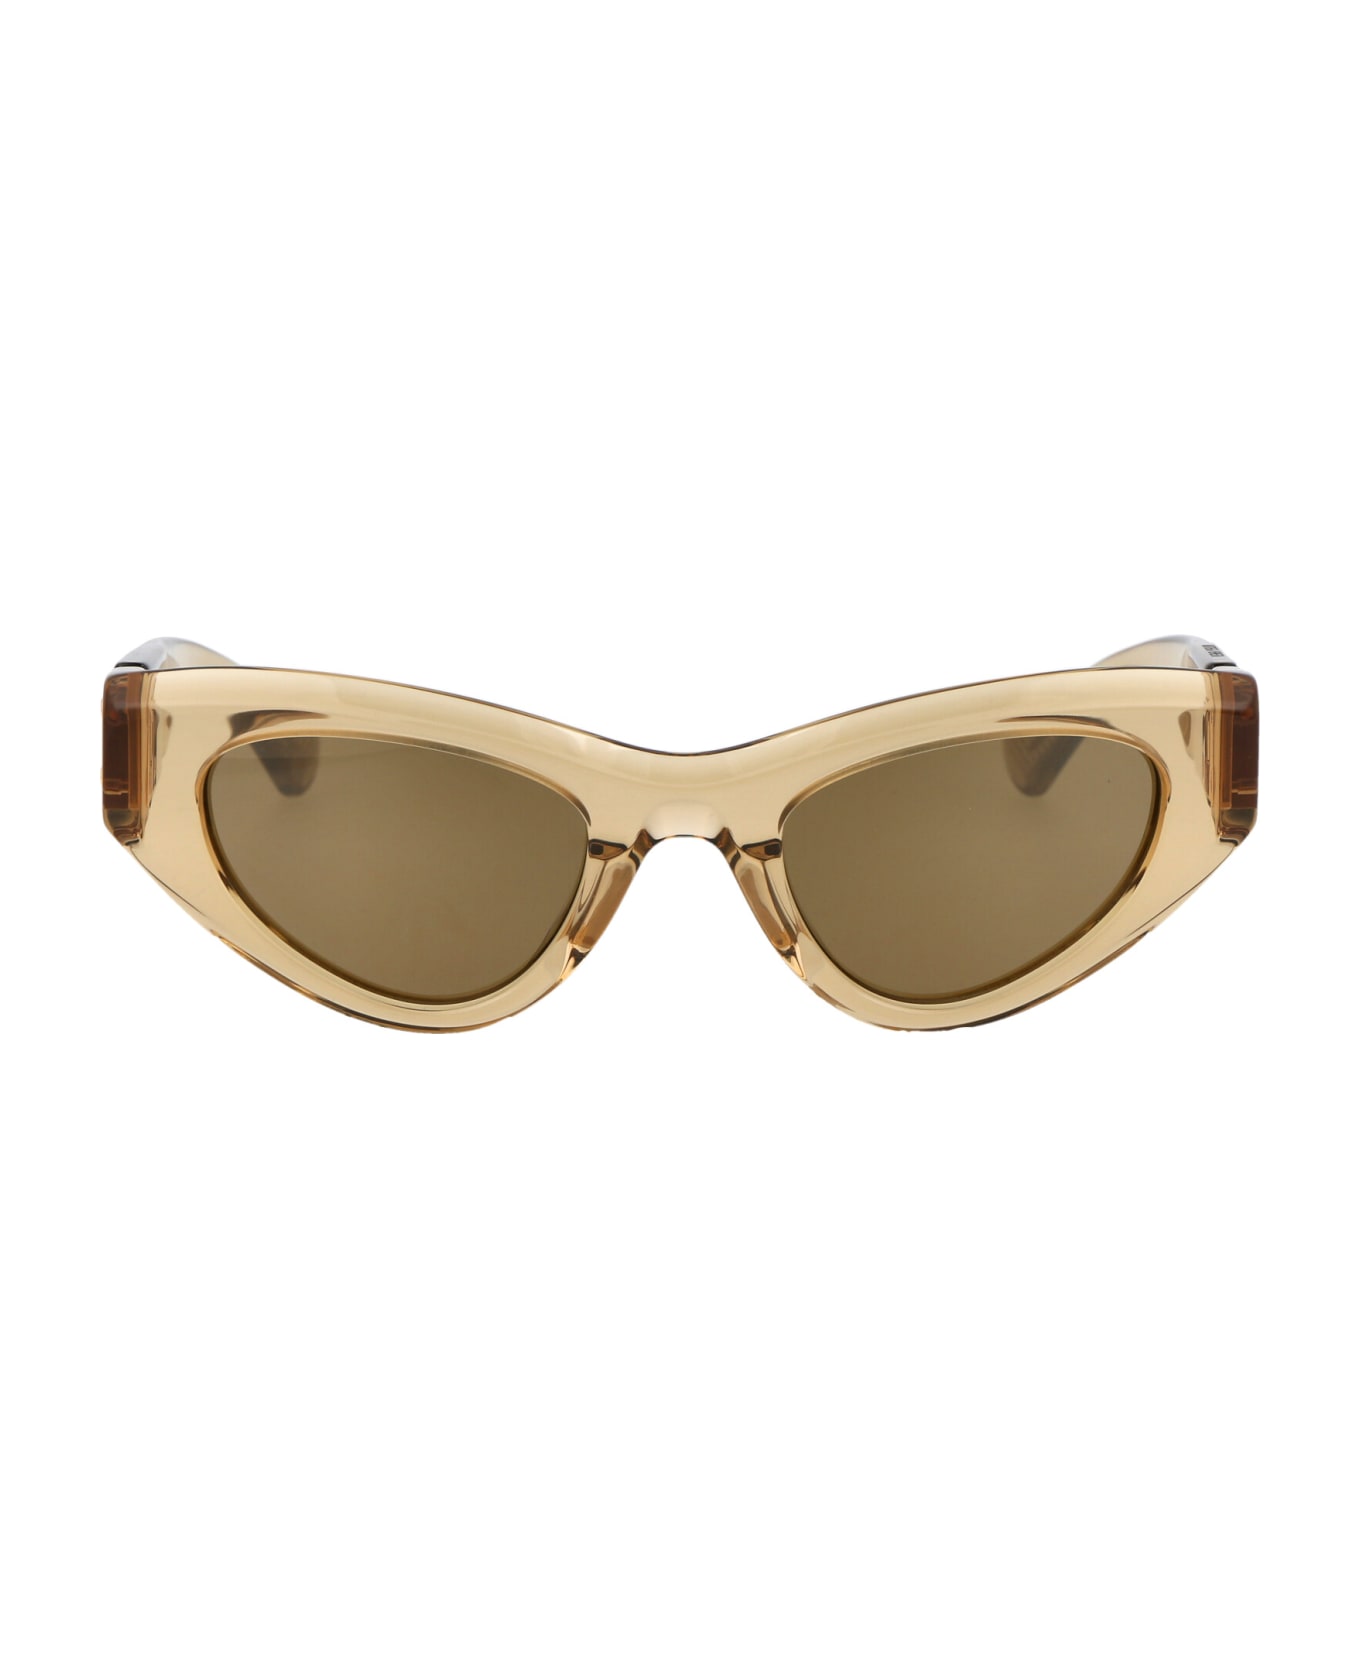 Bottega Veneta Eyewear Bv1142s Sunglasses - 003 BROWN BROWN BRONZE